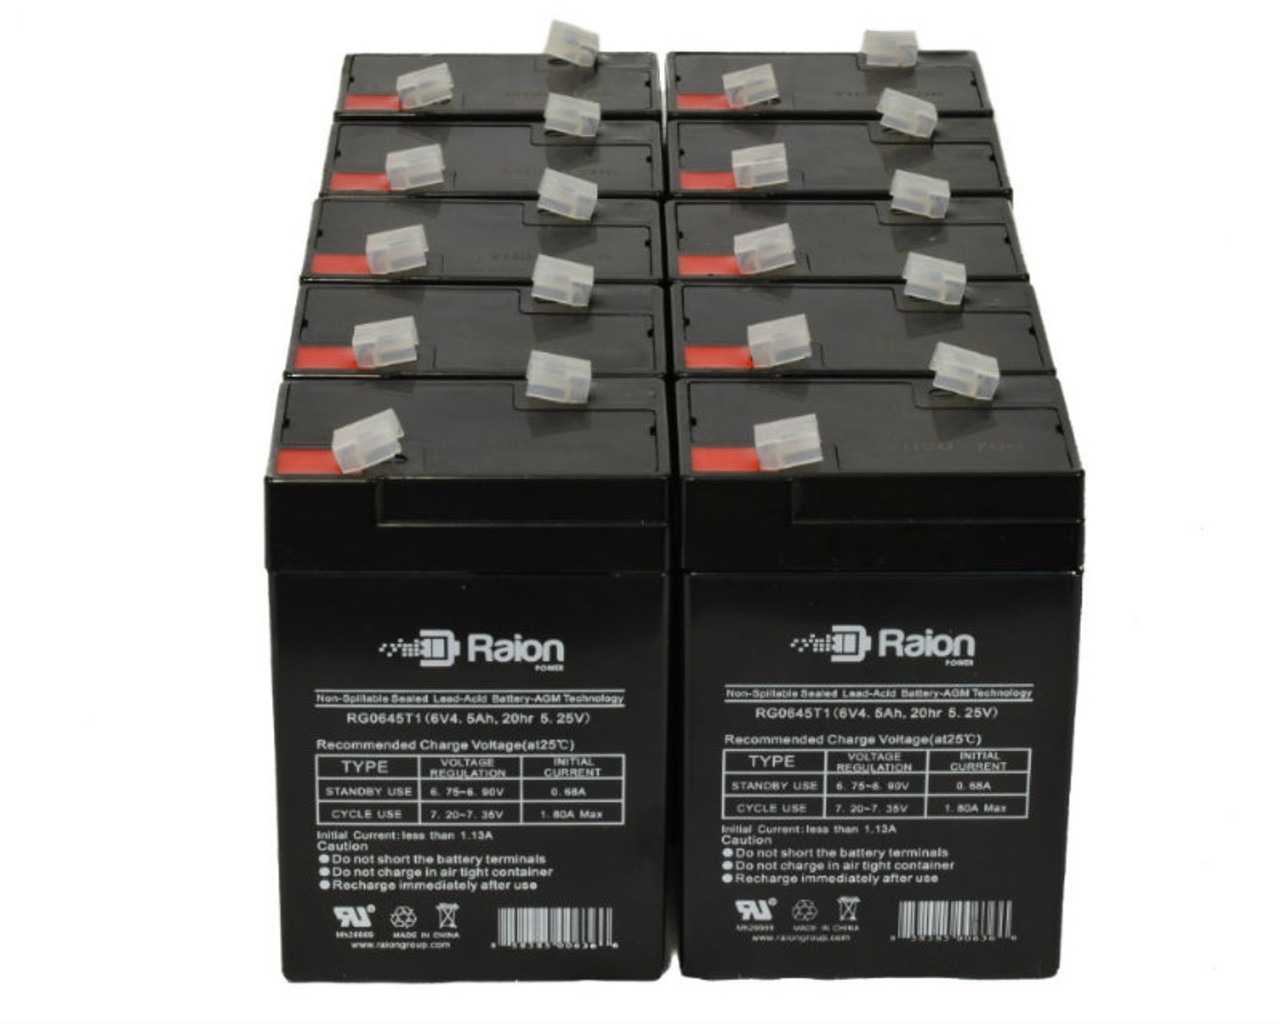 Raion Power 6V 4.5Ah Replacement Emergency Light Battery for JohnLite 100 - 10 Pack